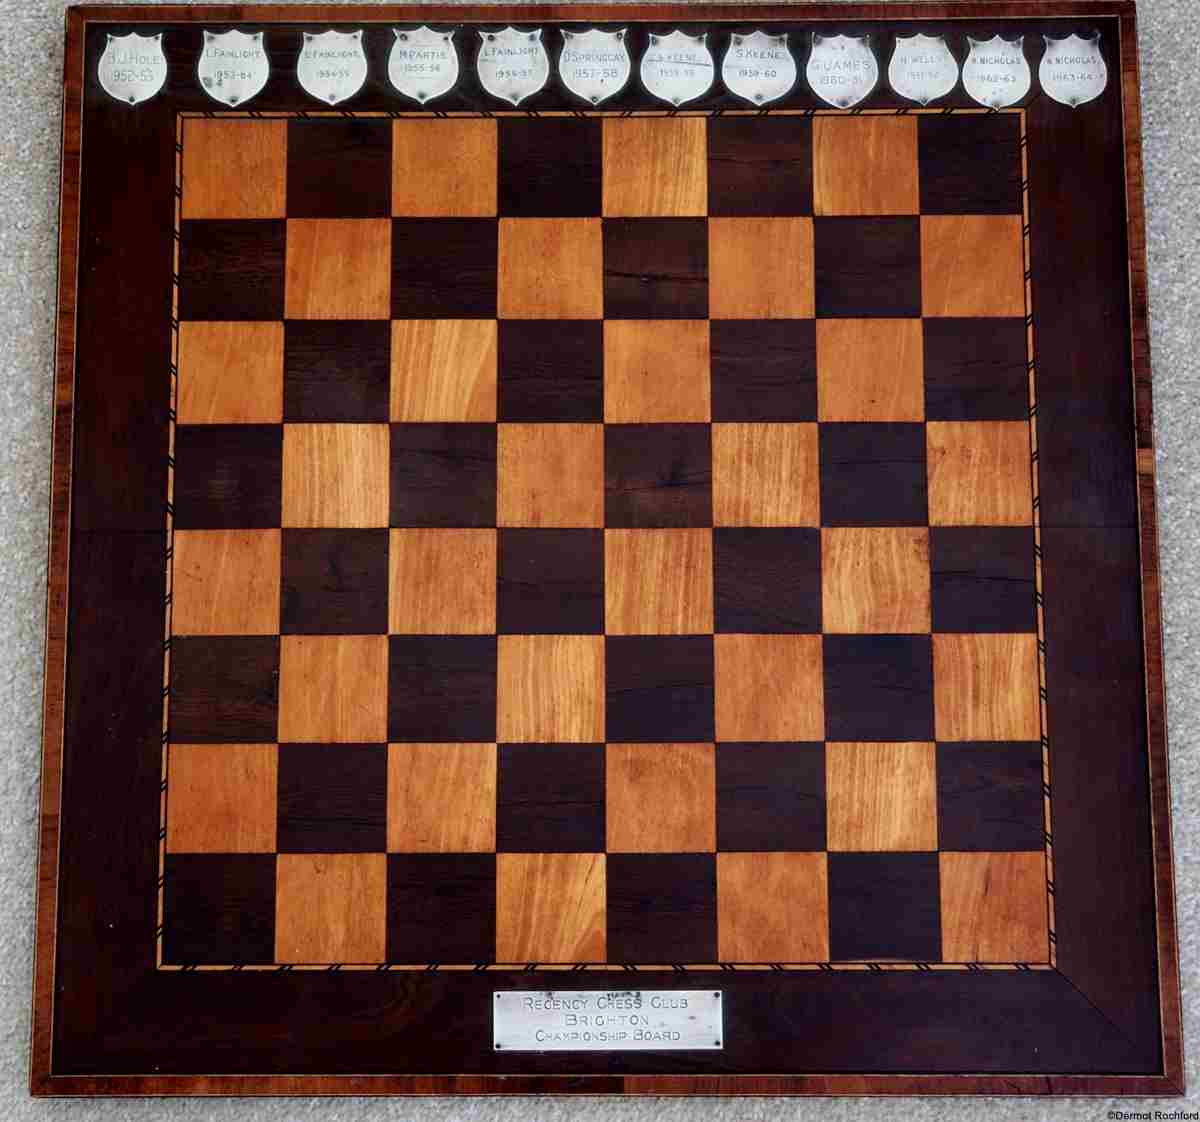 Antique English chessboard